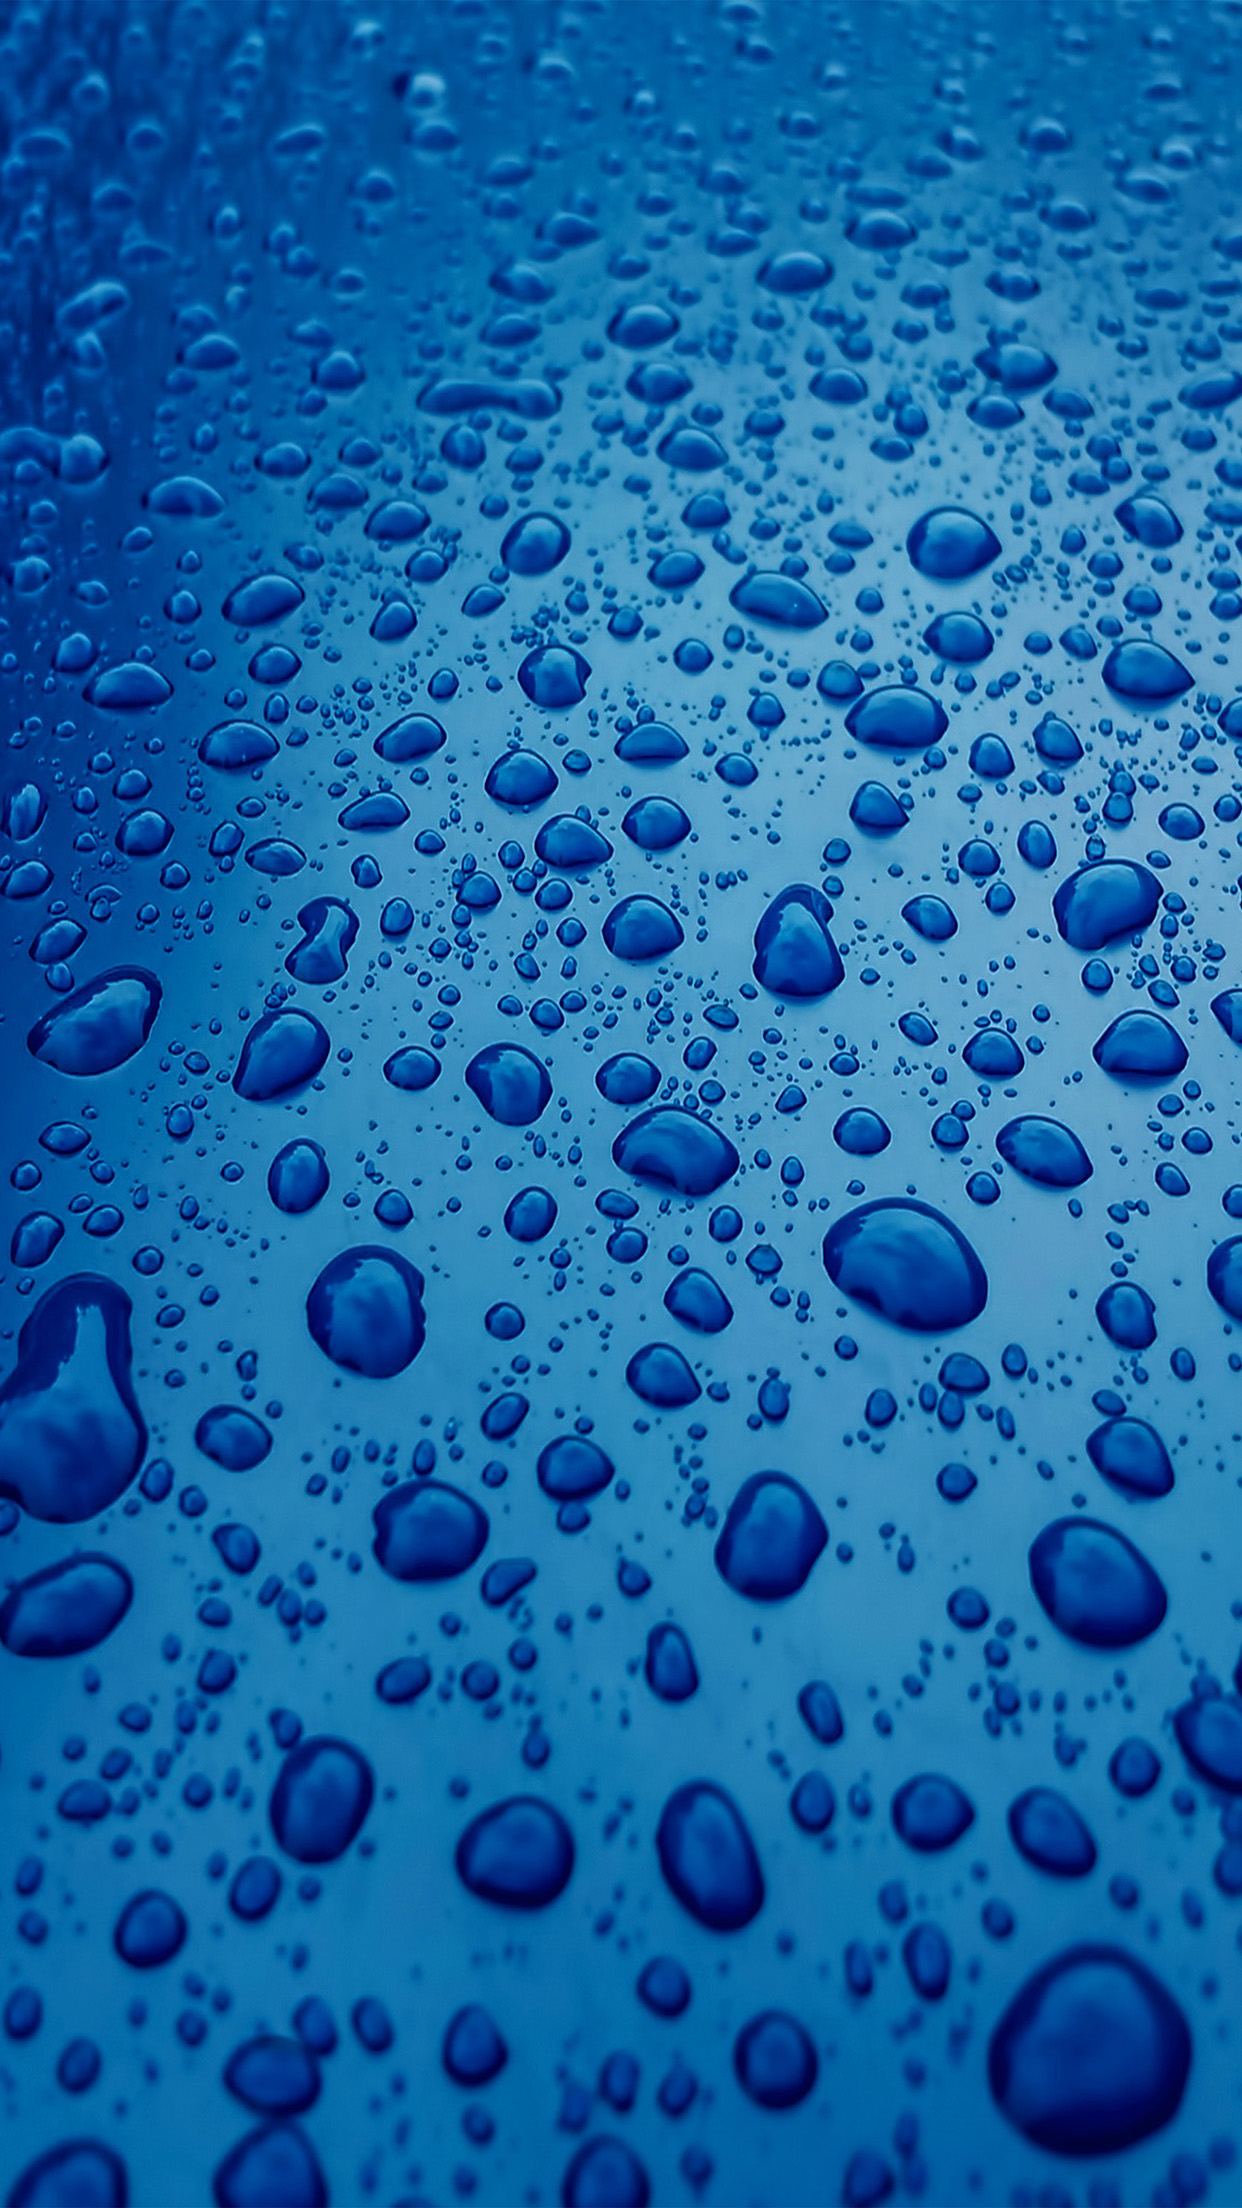 iPhone X wallpaper. rain drop nature blue sad pattern